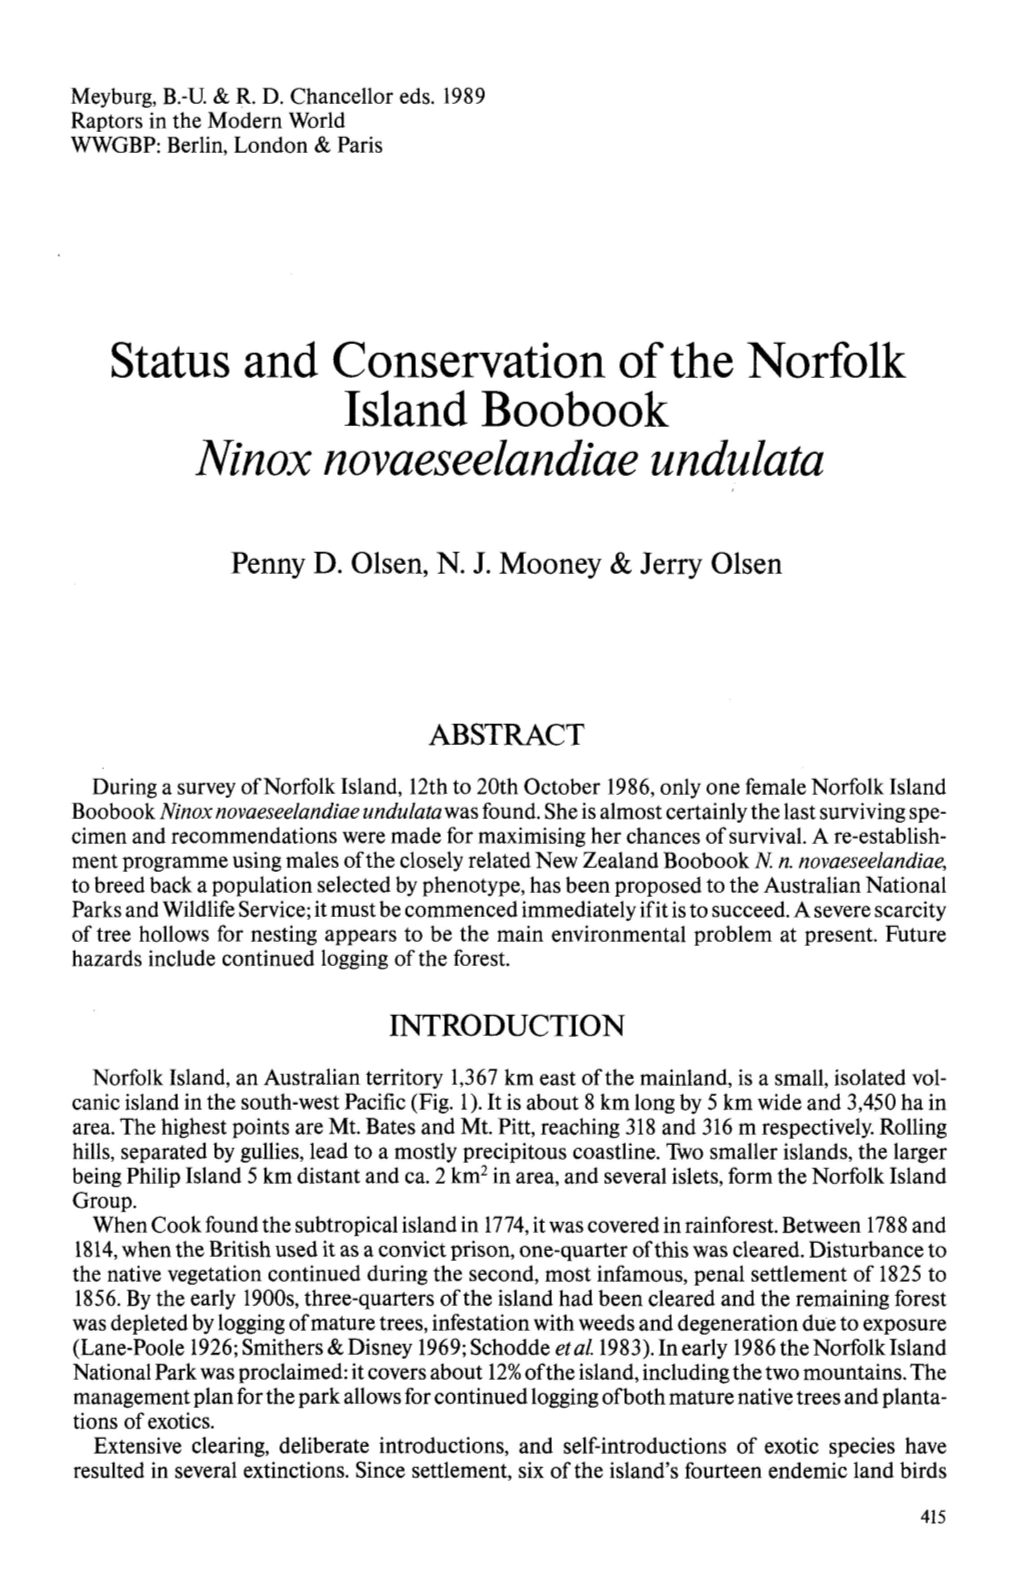 Status and Conservation of the Norfolk Island Boobook Ninox Novaeseelandiae Undulata